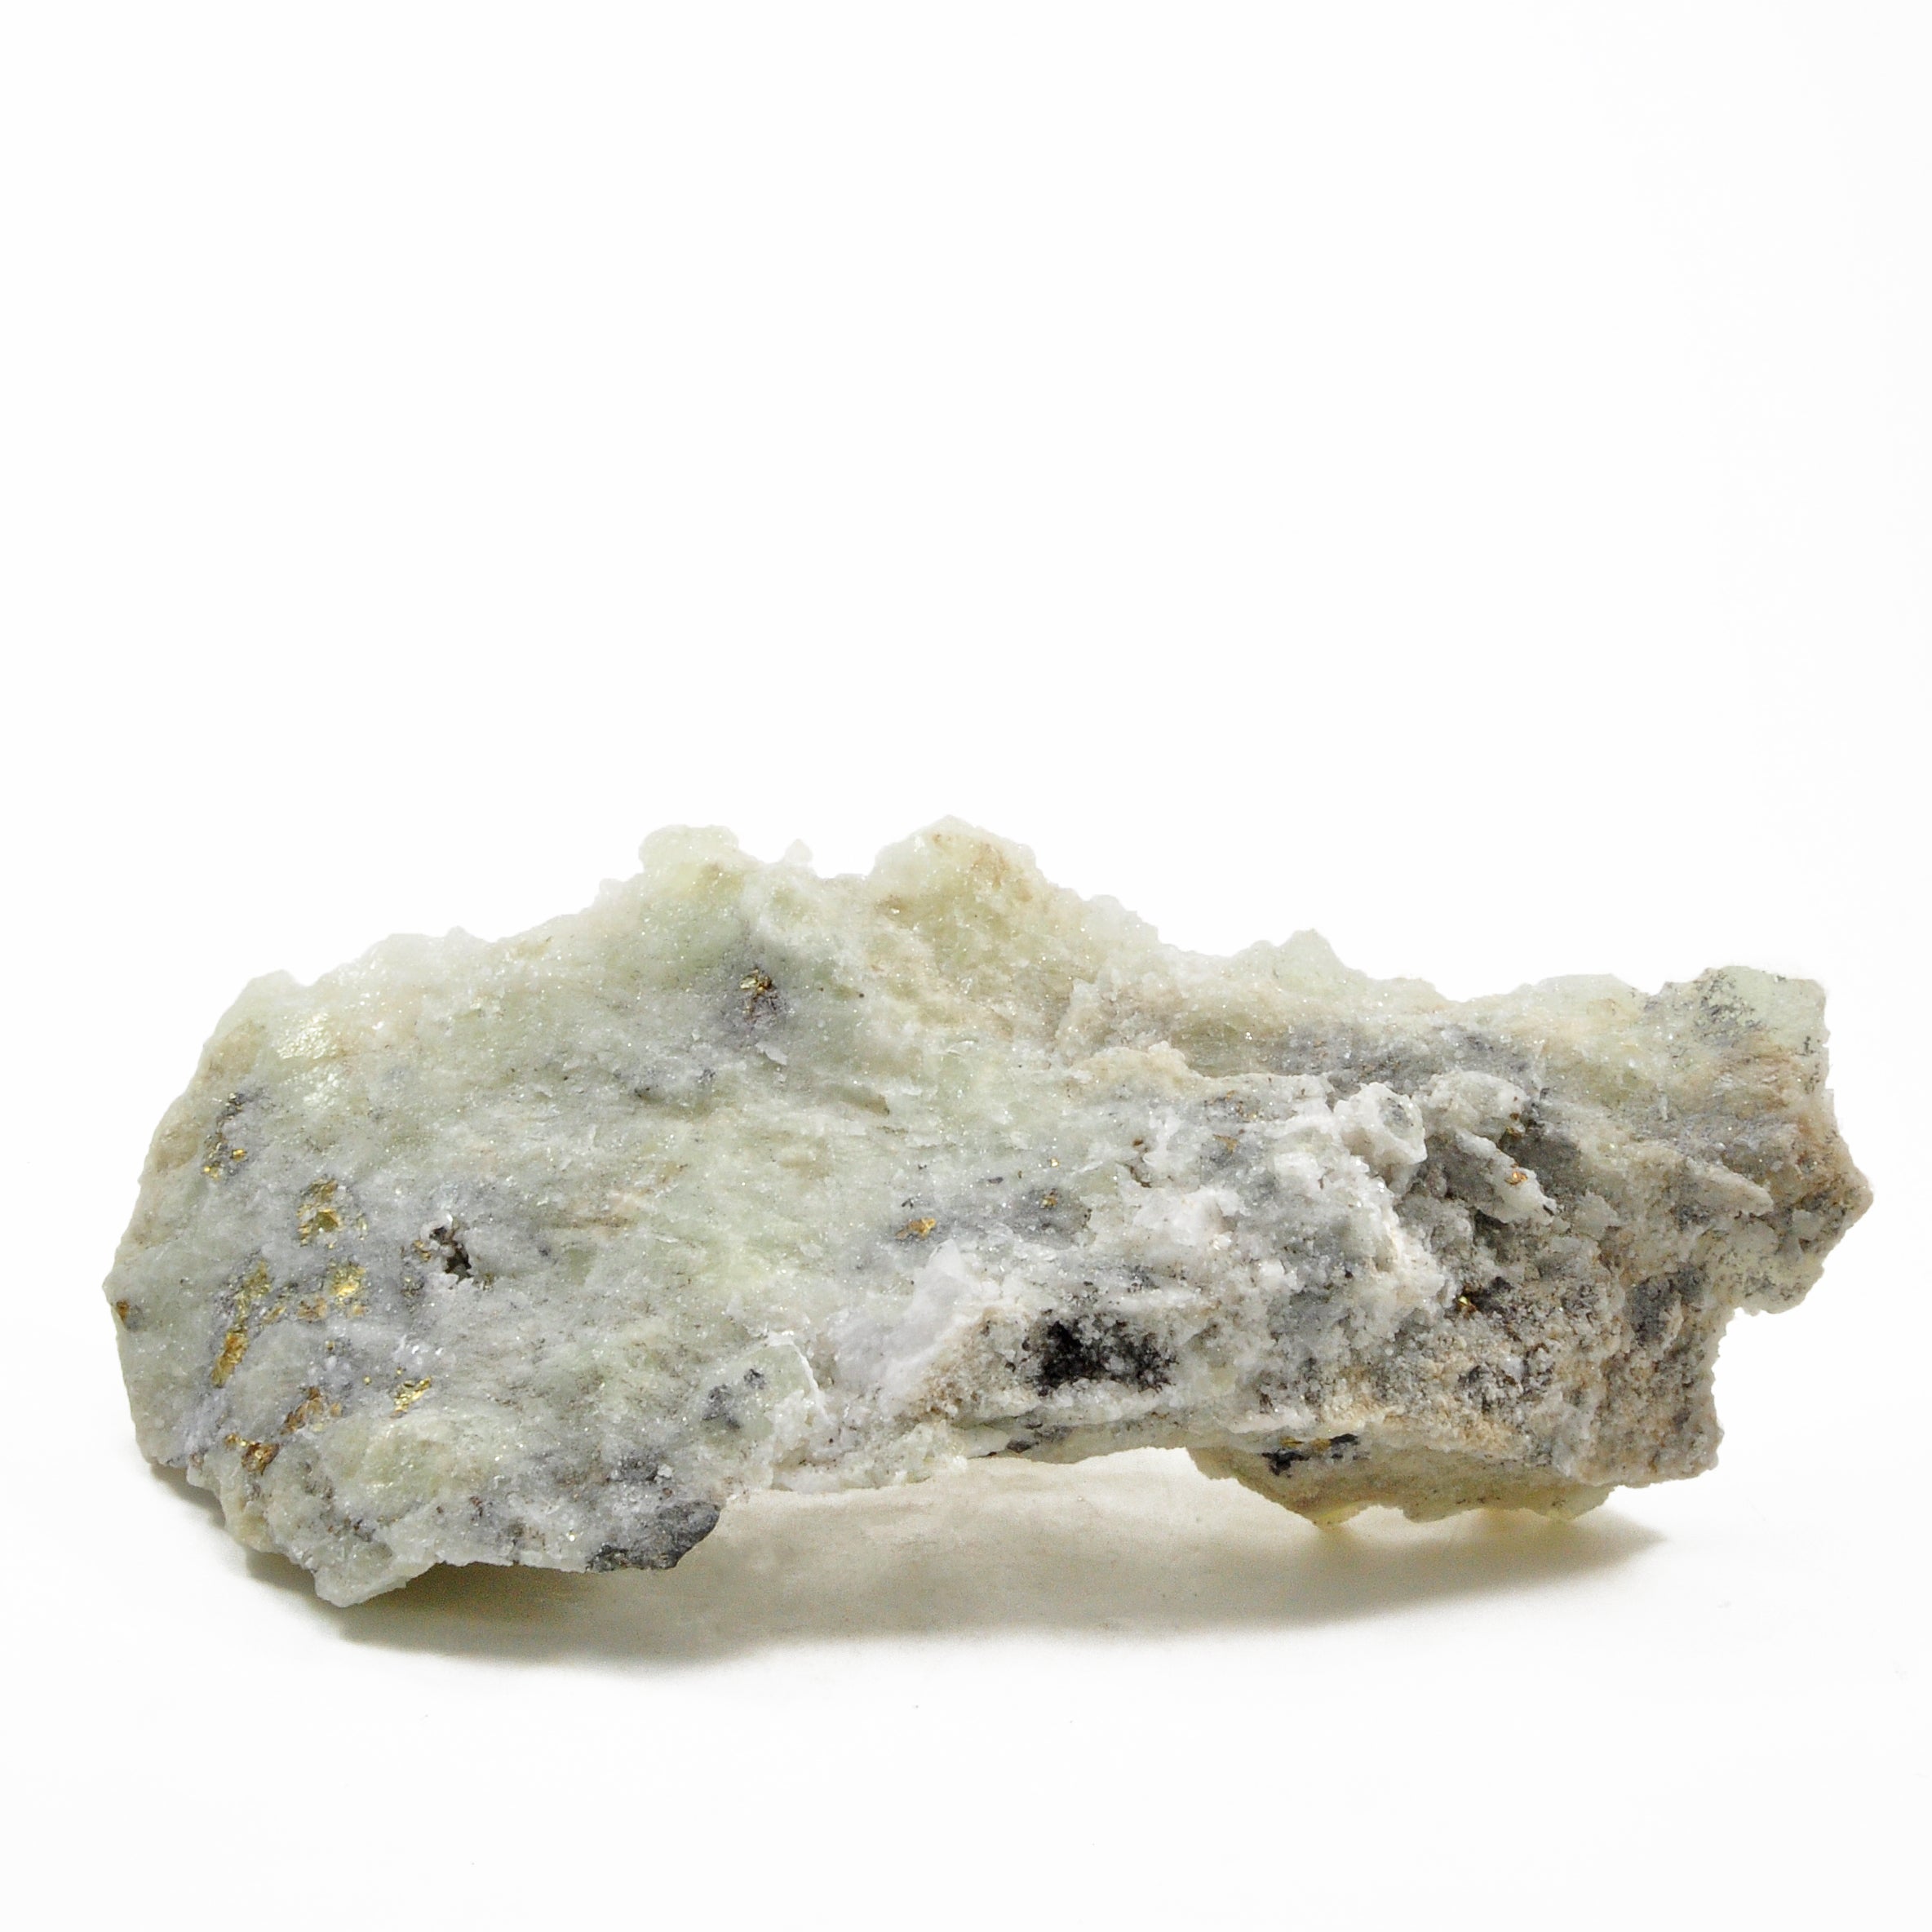 Datolite 2.76lb Natural Crystal Specimen With Apophyllite Overgrowth- Mexico - EEX-051 - Crystalarium